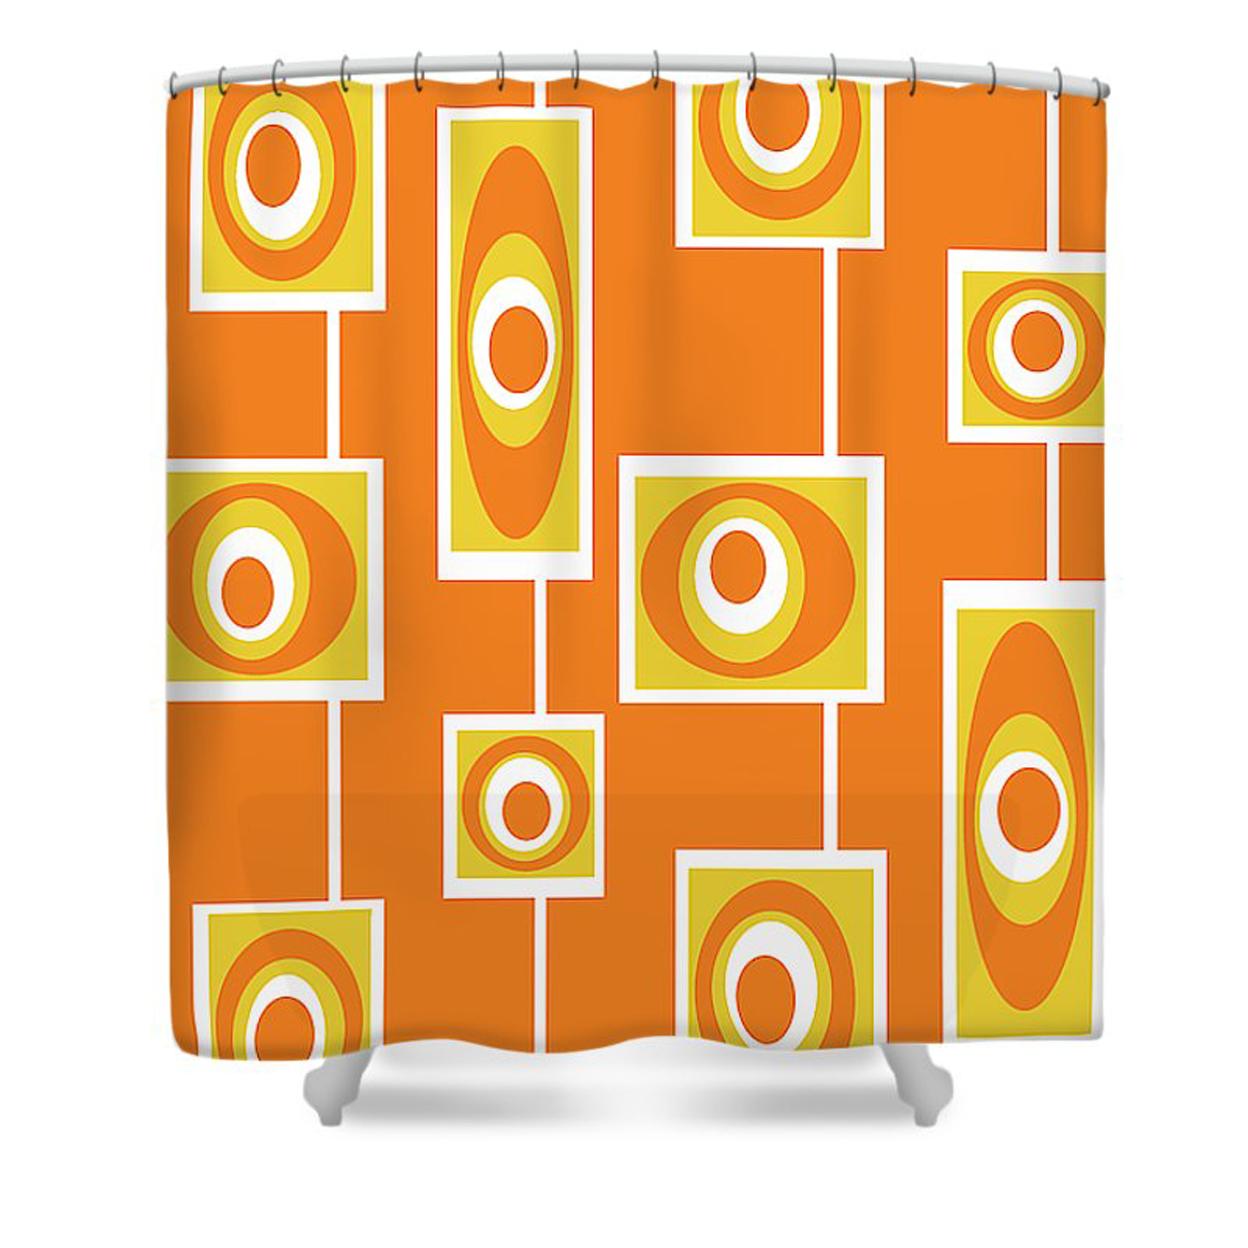 Shower Curtain - Crash Pad Designs Jay